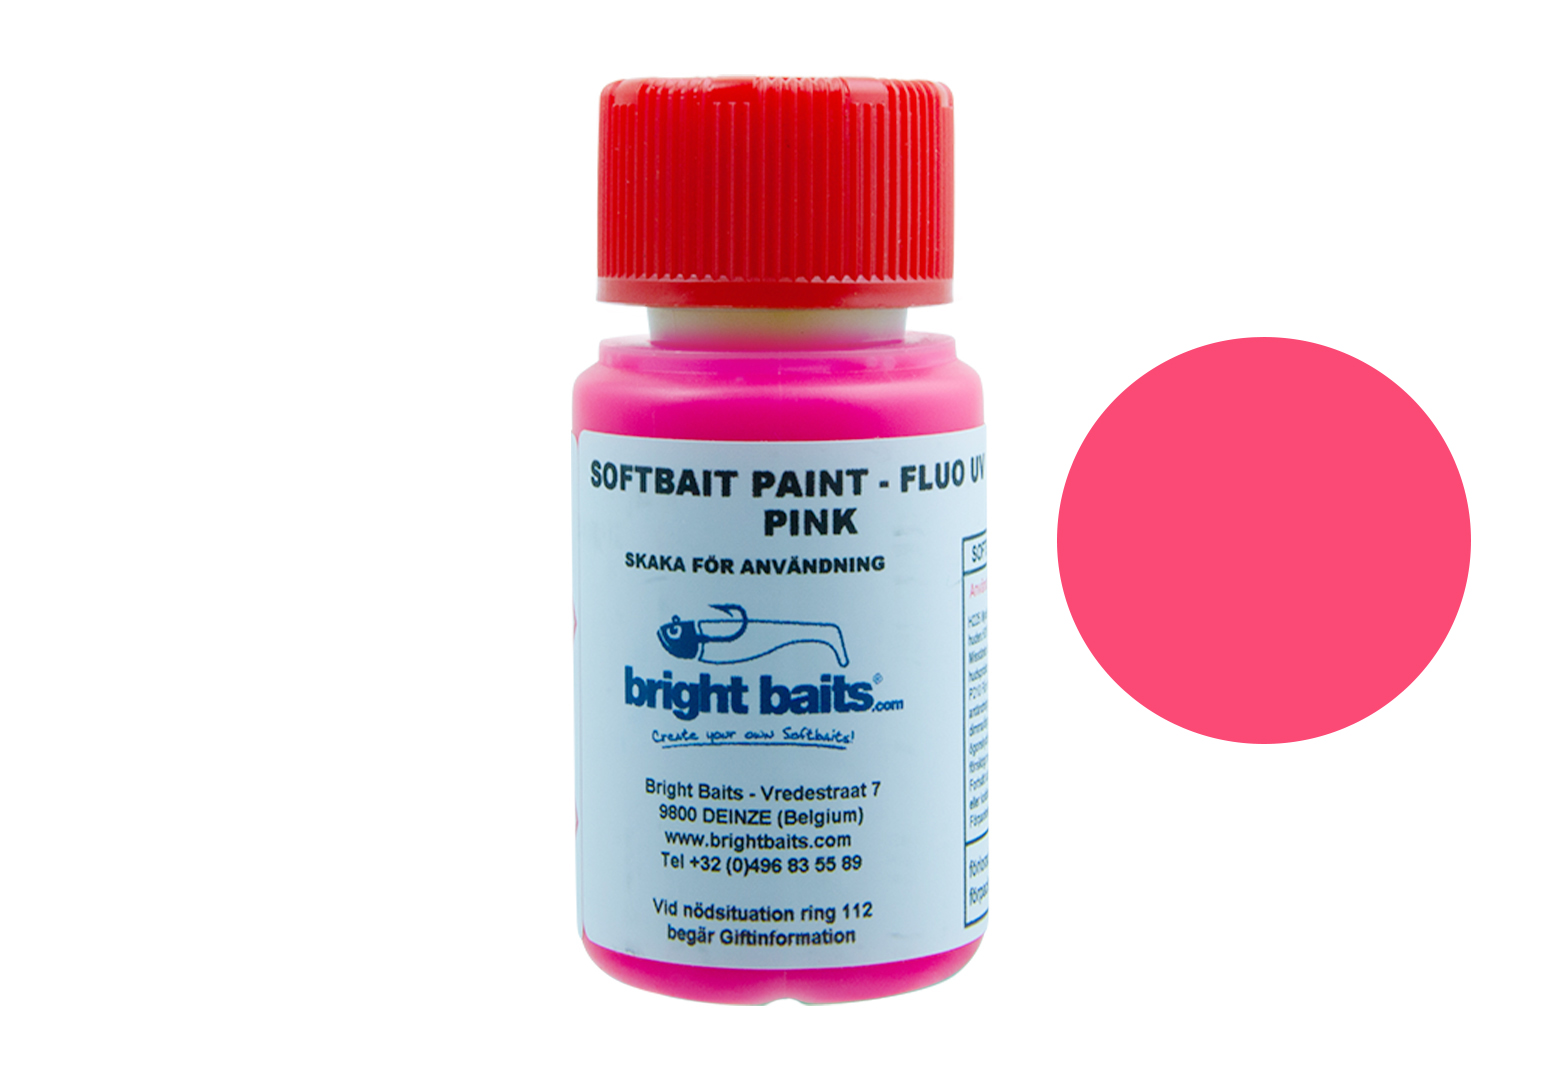 Softbait Paint Fluo Pink - 60ml